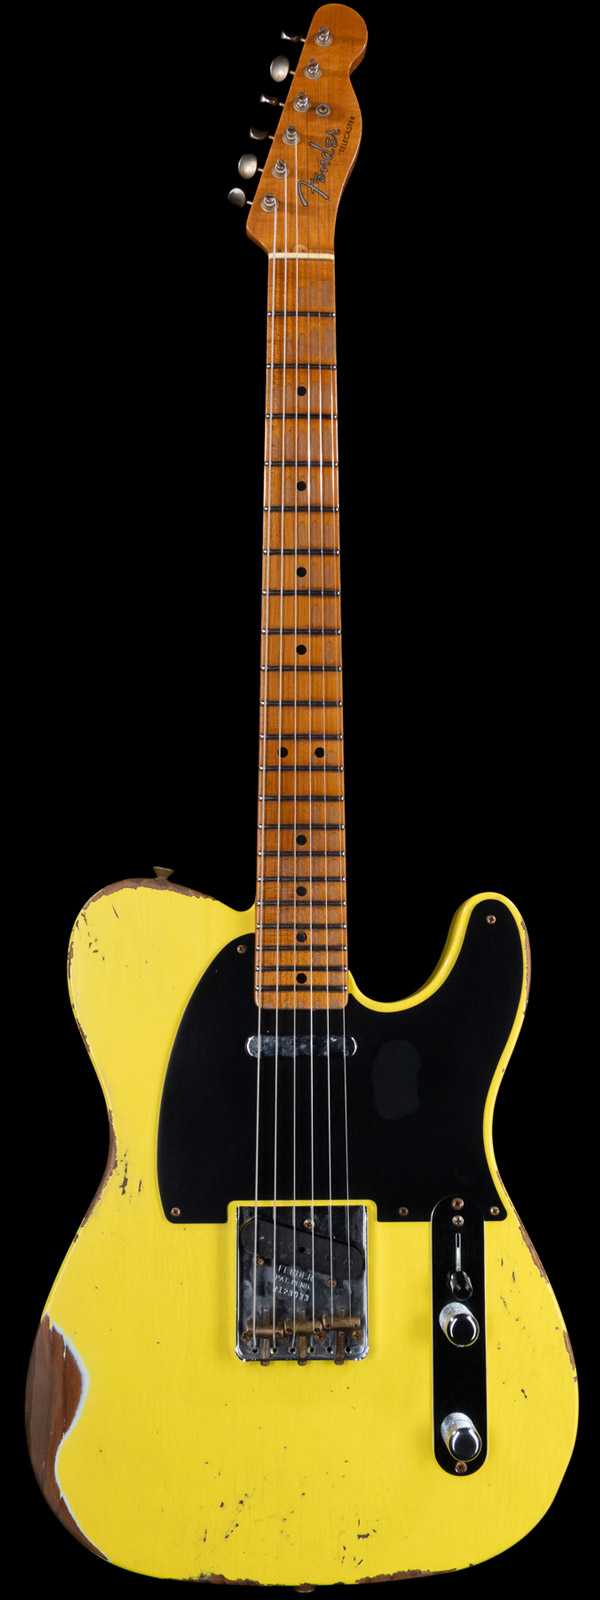 Fender Custom Shop 1952 Telecaster Heavy Relic Roasted Body and Neck Streamlined U Neck Carve Graffiti Yellow